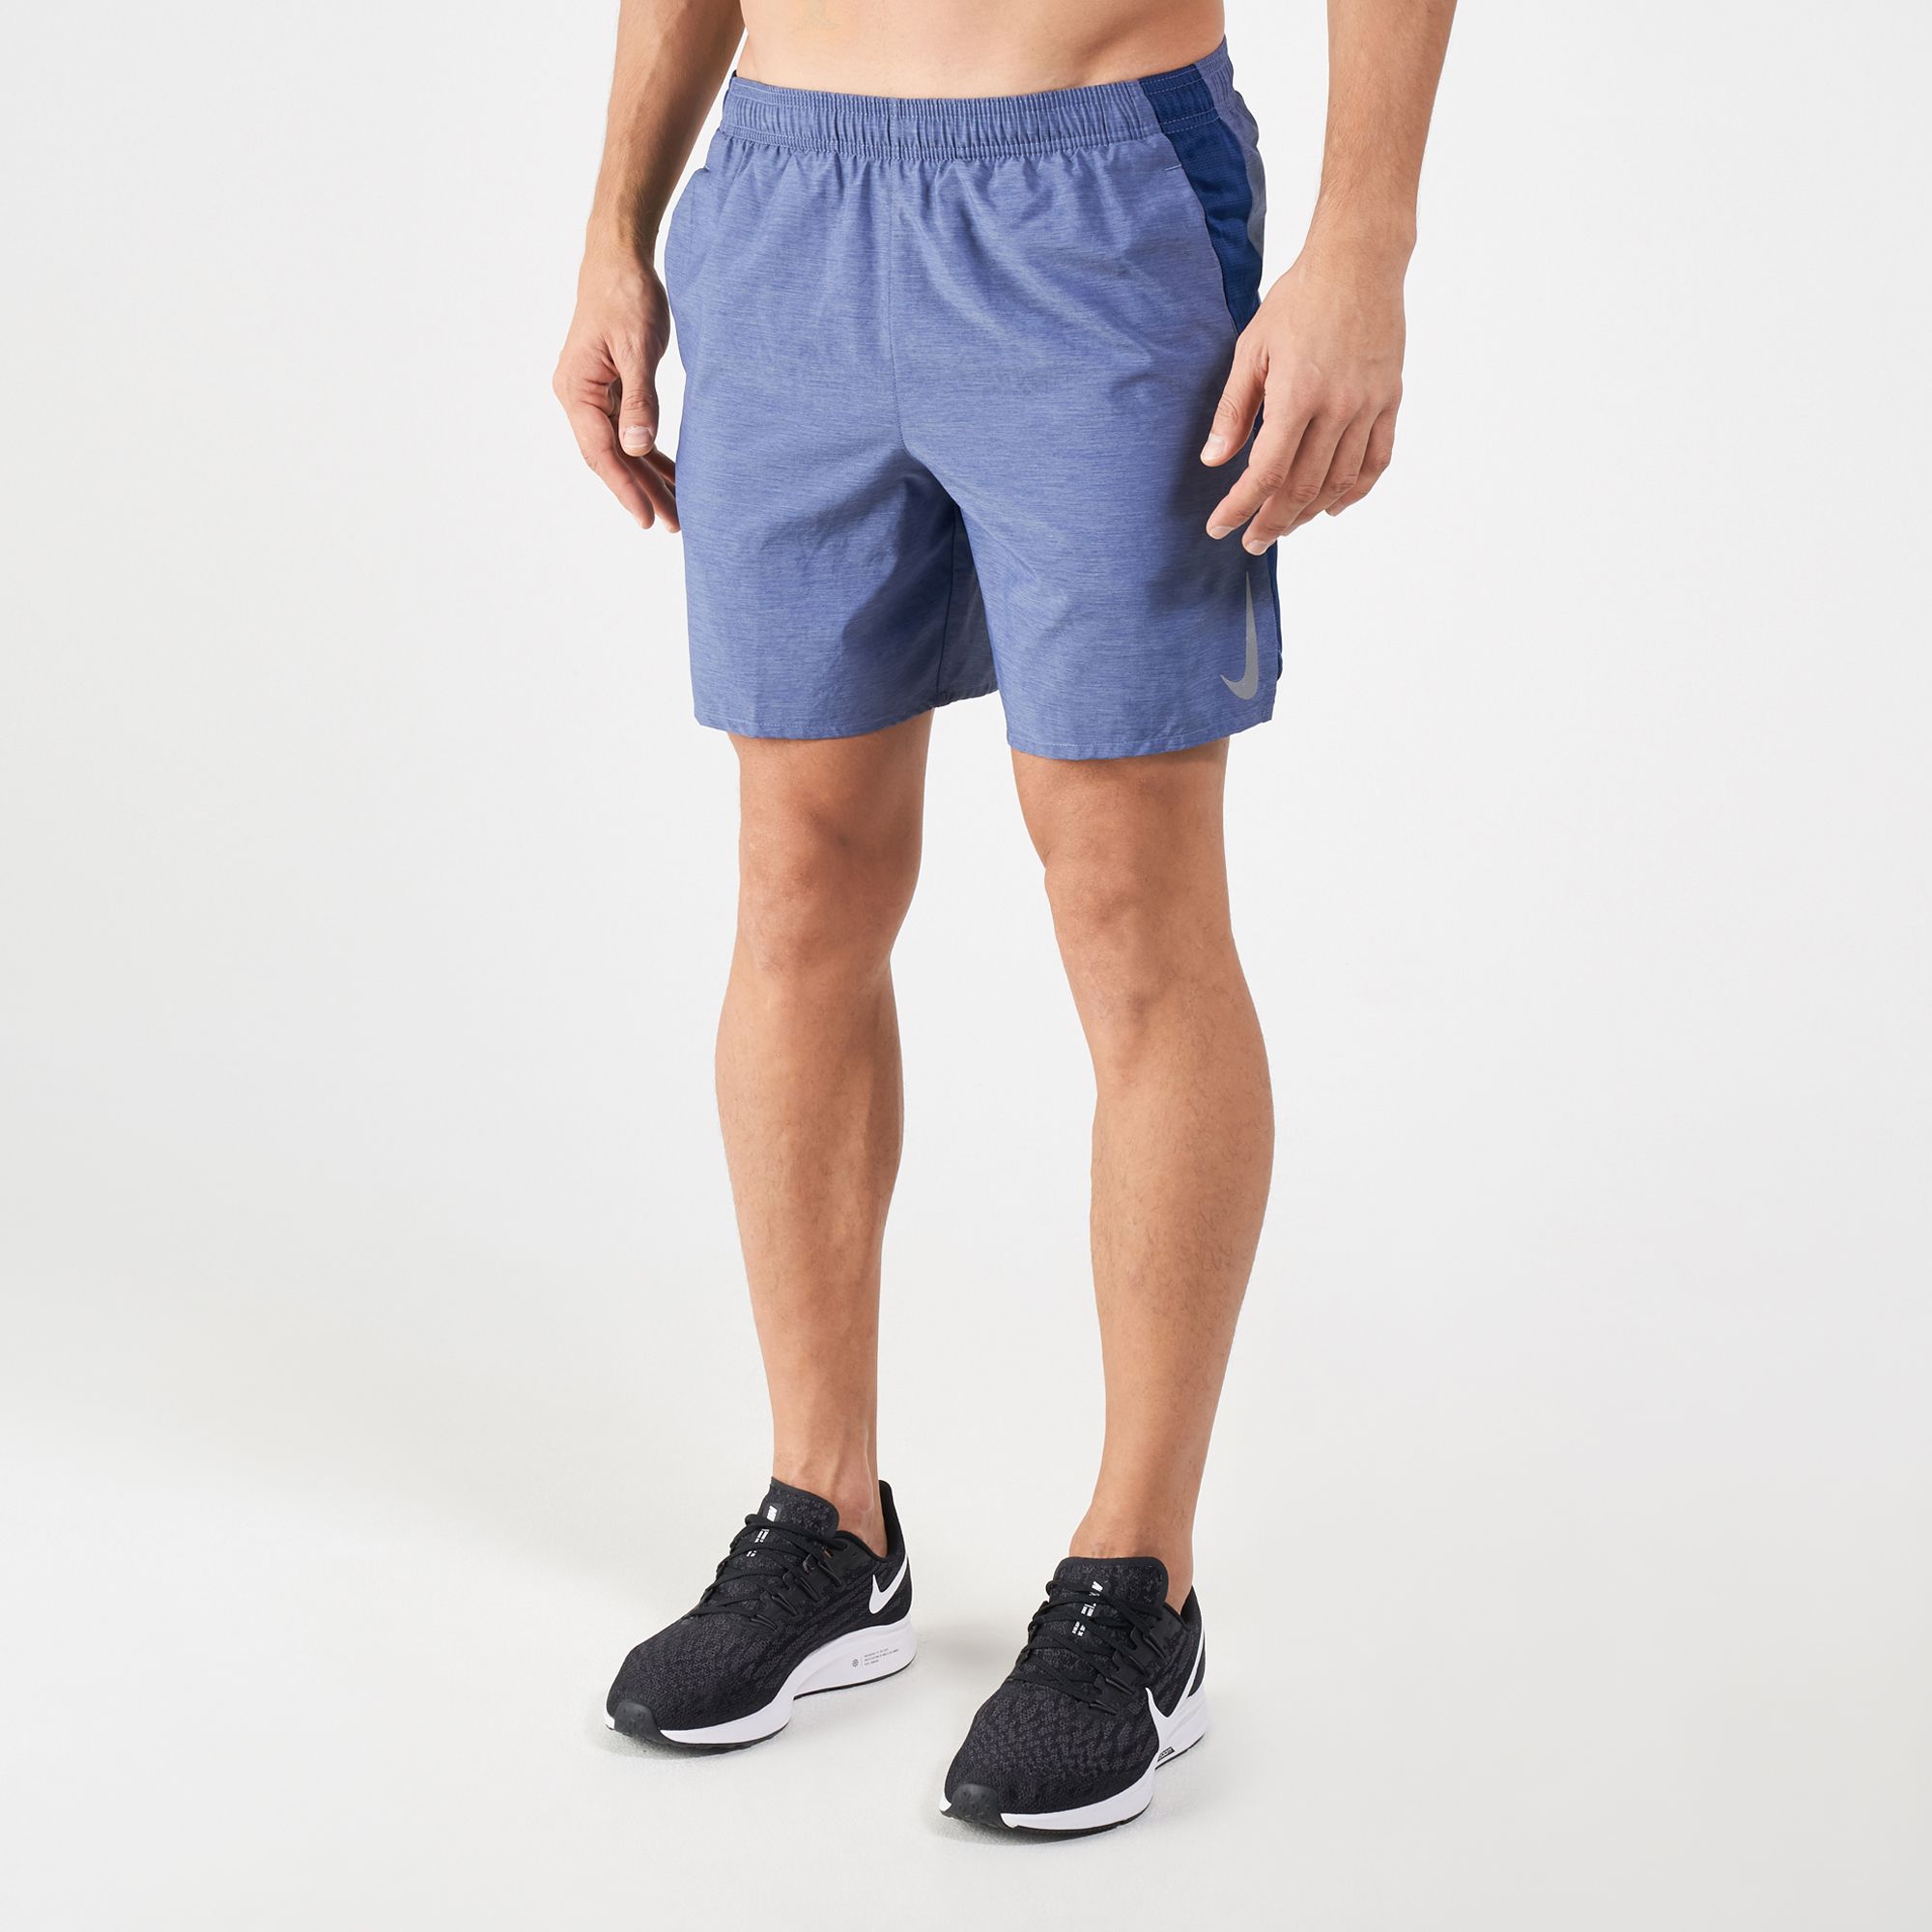 nike 7 inch running shorts mens